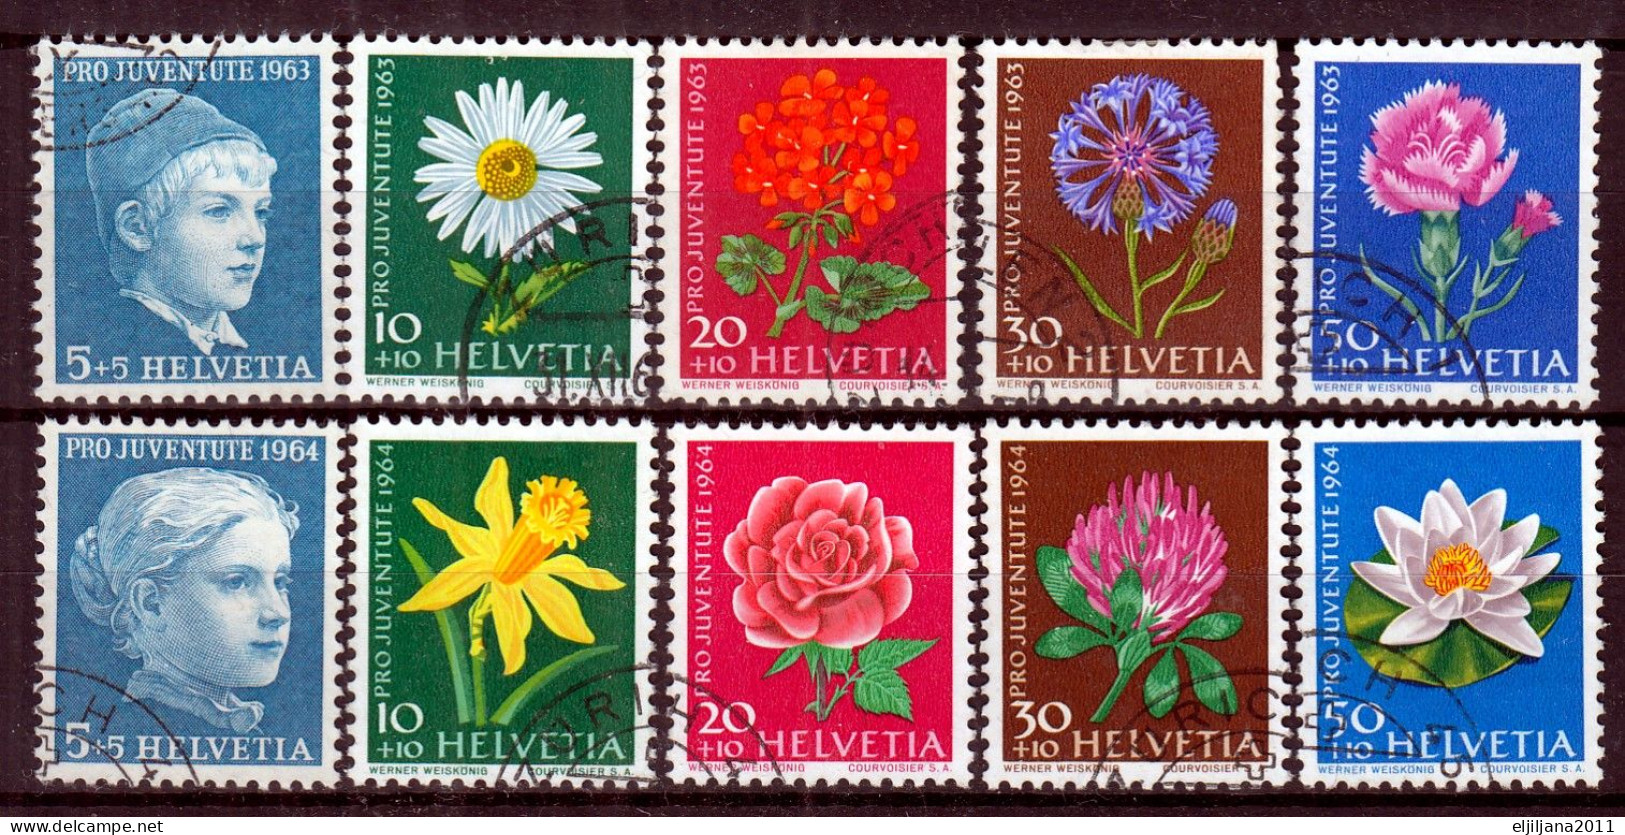 Switzerland / Helvetia / Schweiz / Suisse 1963 & 1964 ⁕ Pro Juventute Mi.786-790 & Mi.803-807 ⁕ 10v Used - Used Stamps